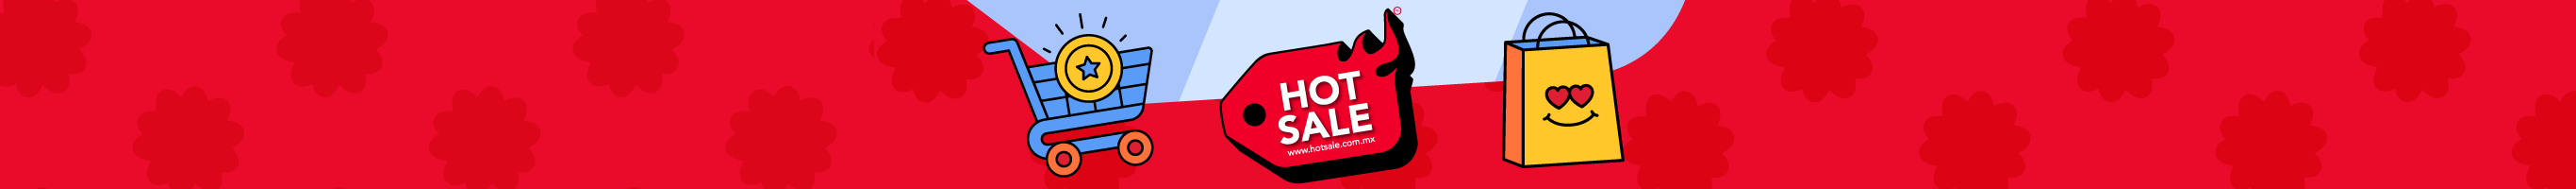 Mattel - Hot Sale